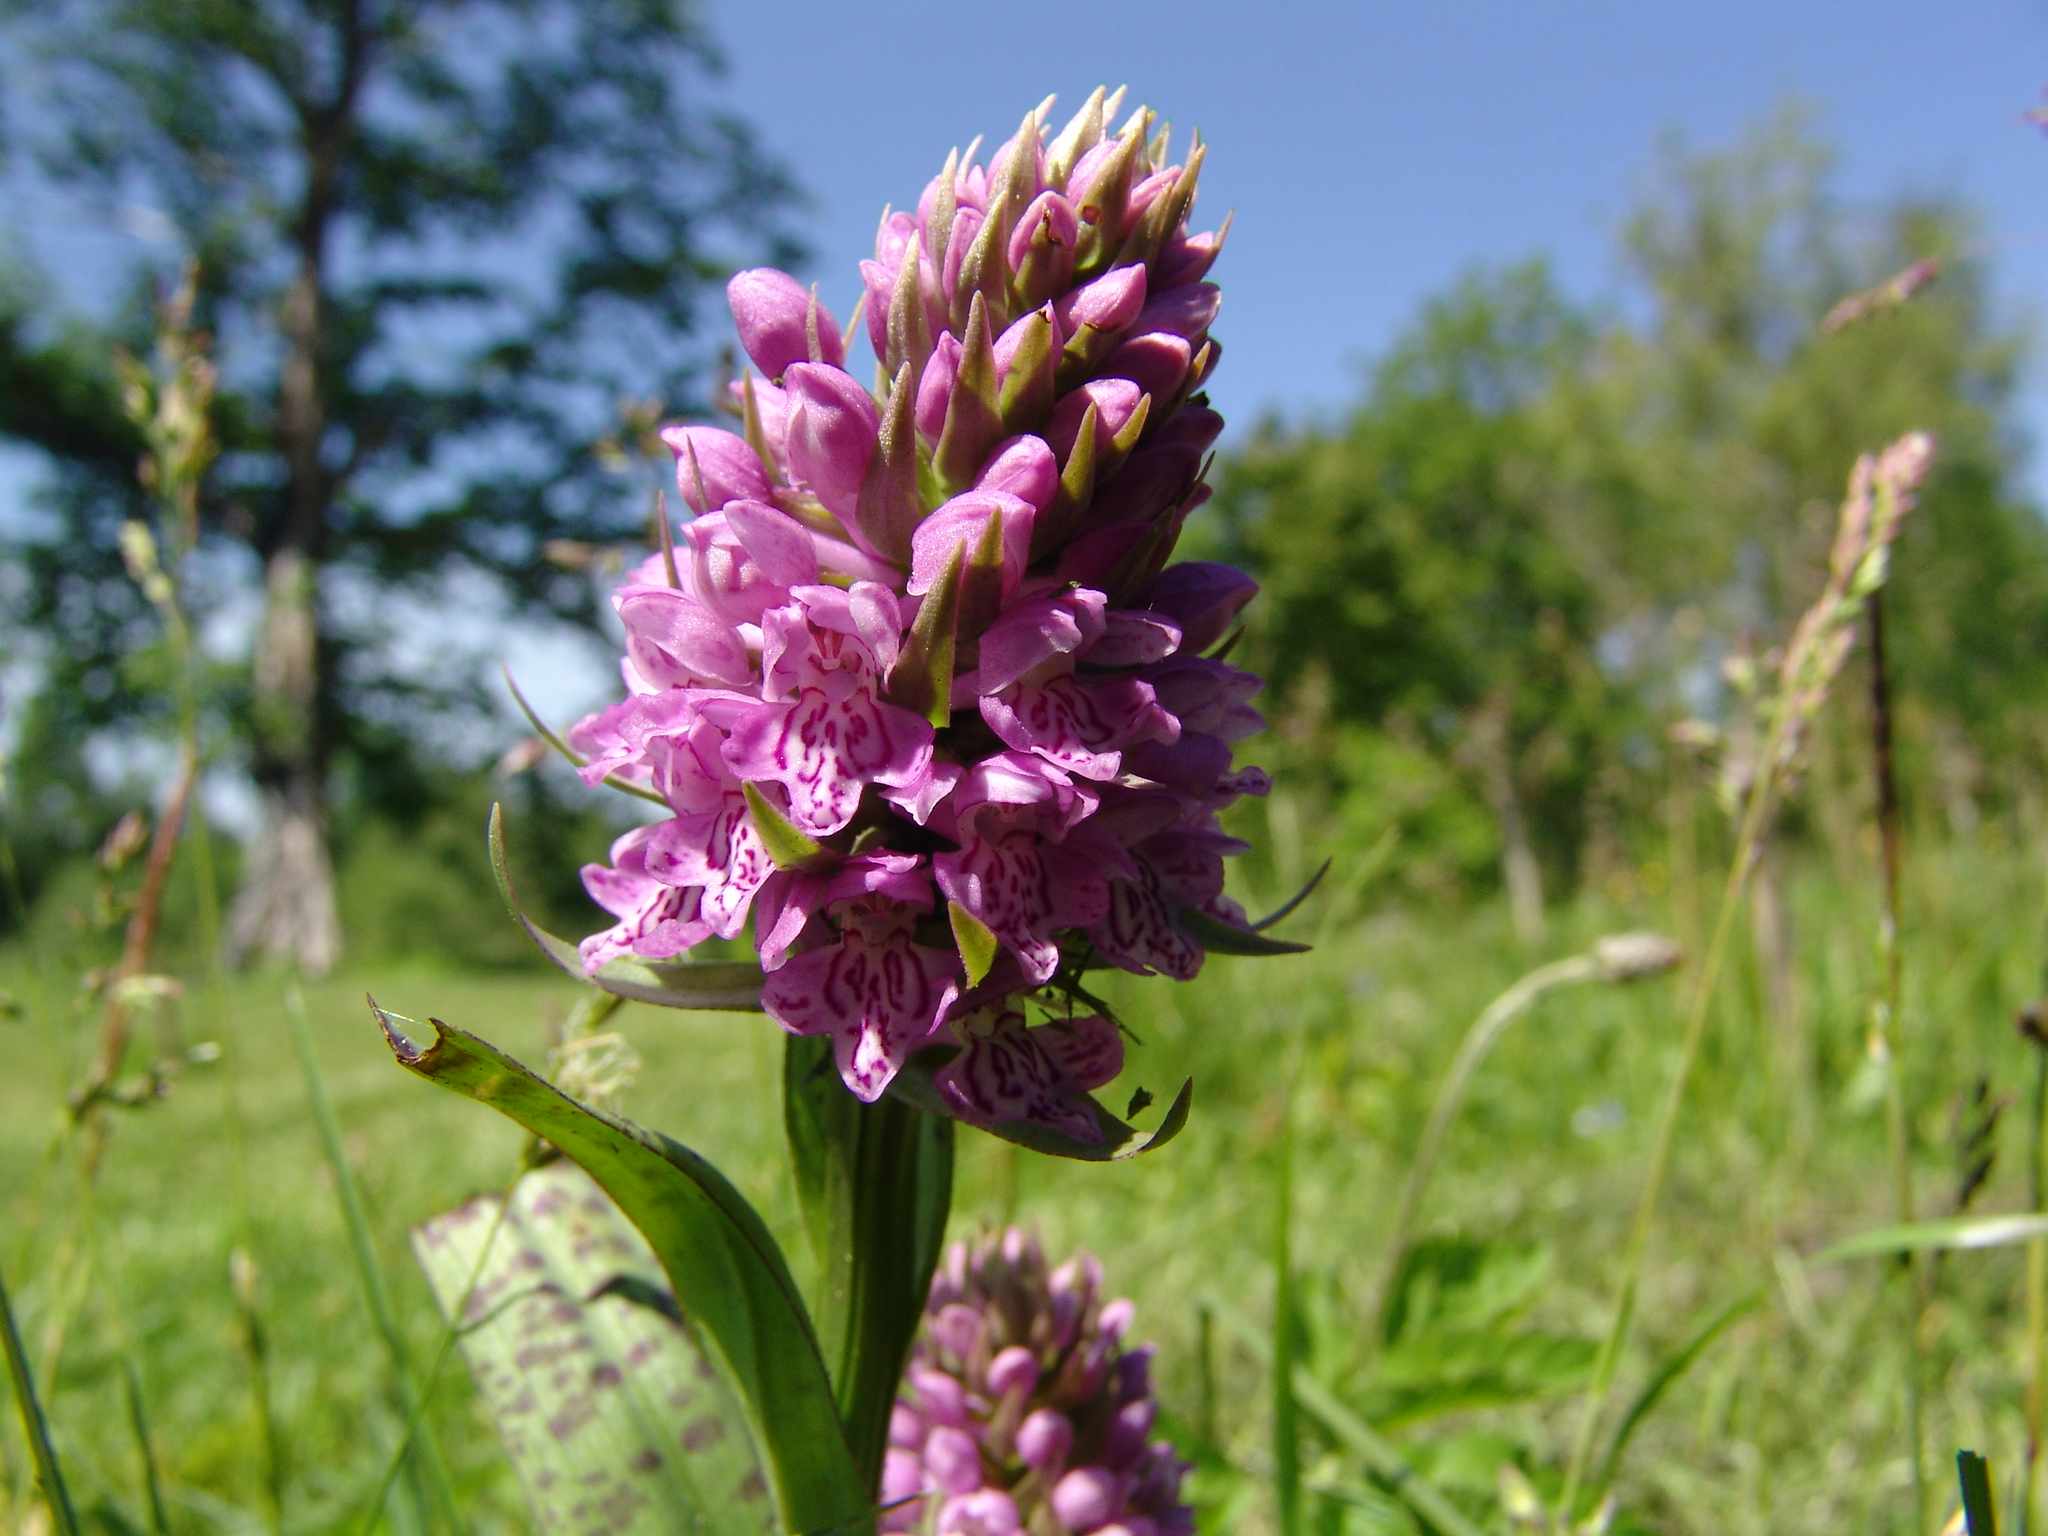 Wild orchid path : Points of interest : Nature Park Pape